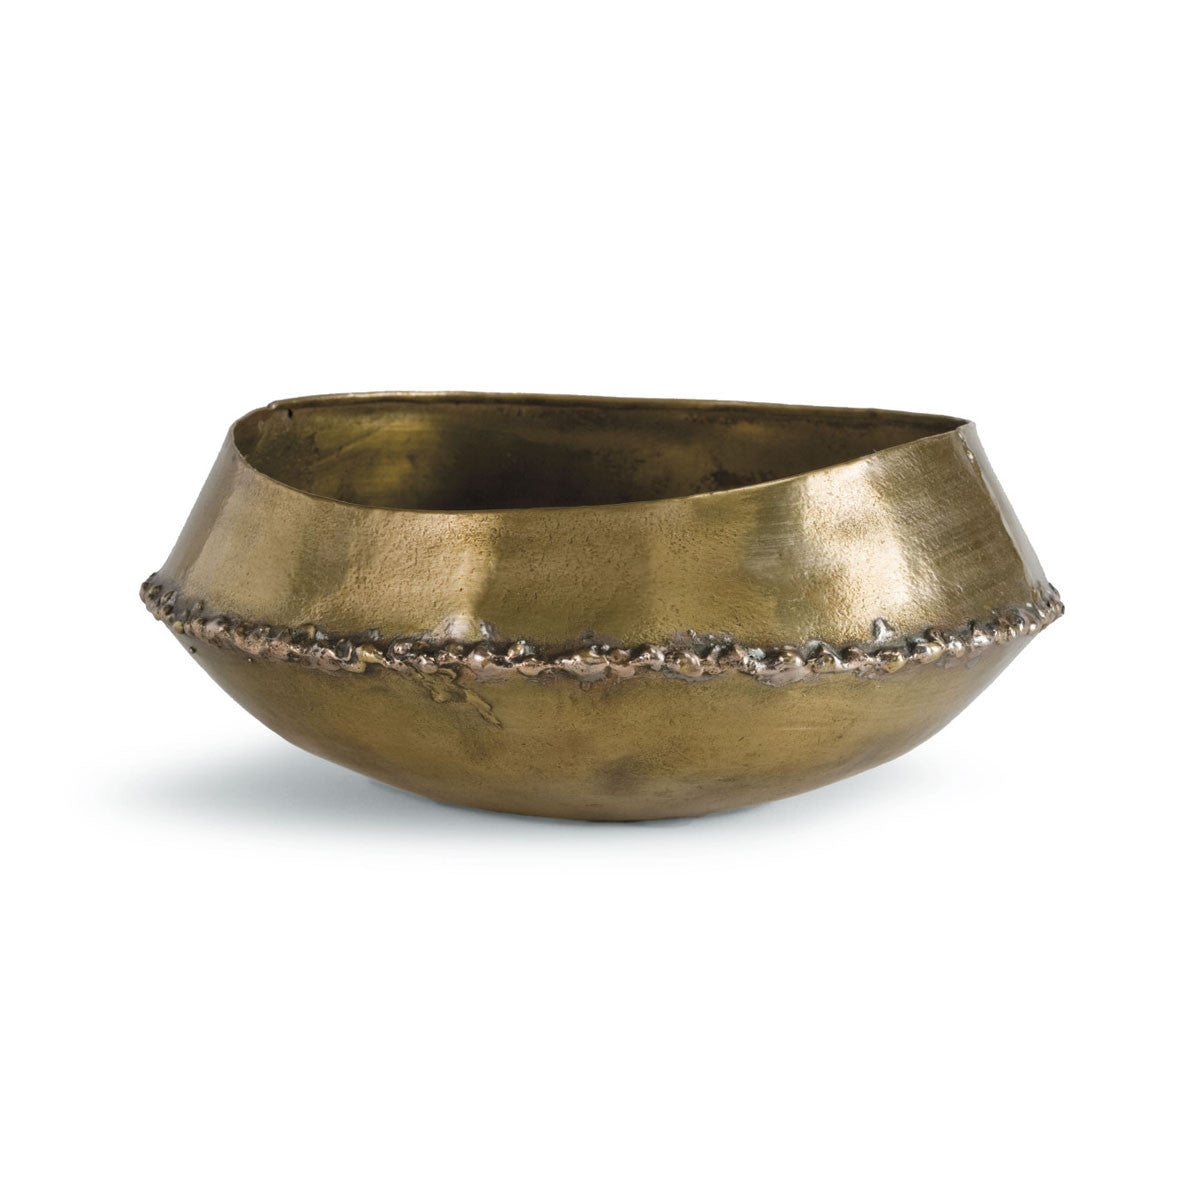 Bedouin Brass Bowl